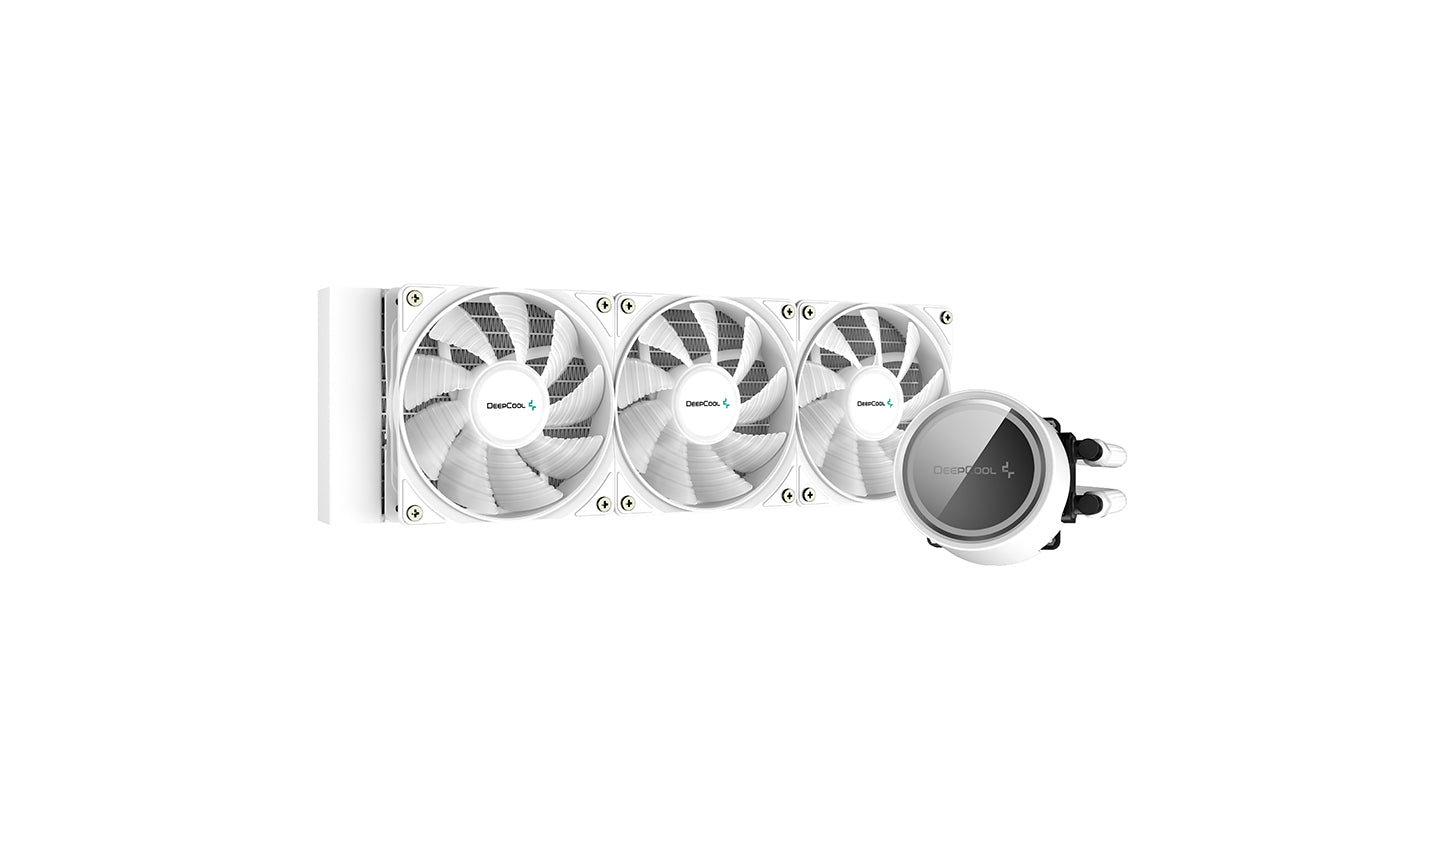 DeepCool GAMMAXX L360 A-RGB White